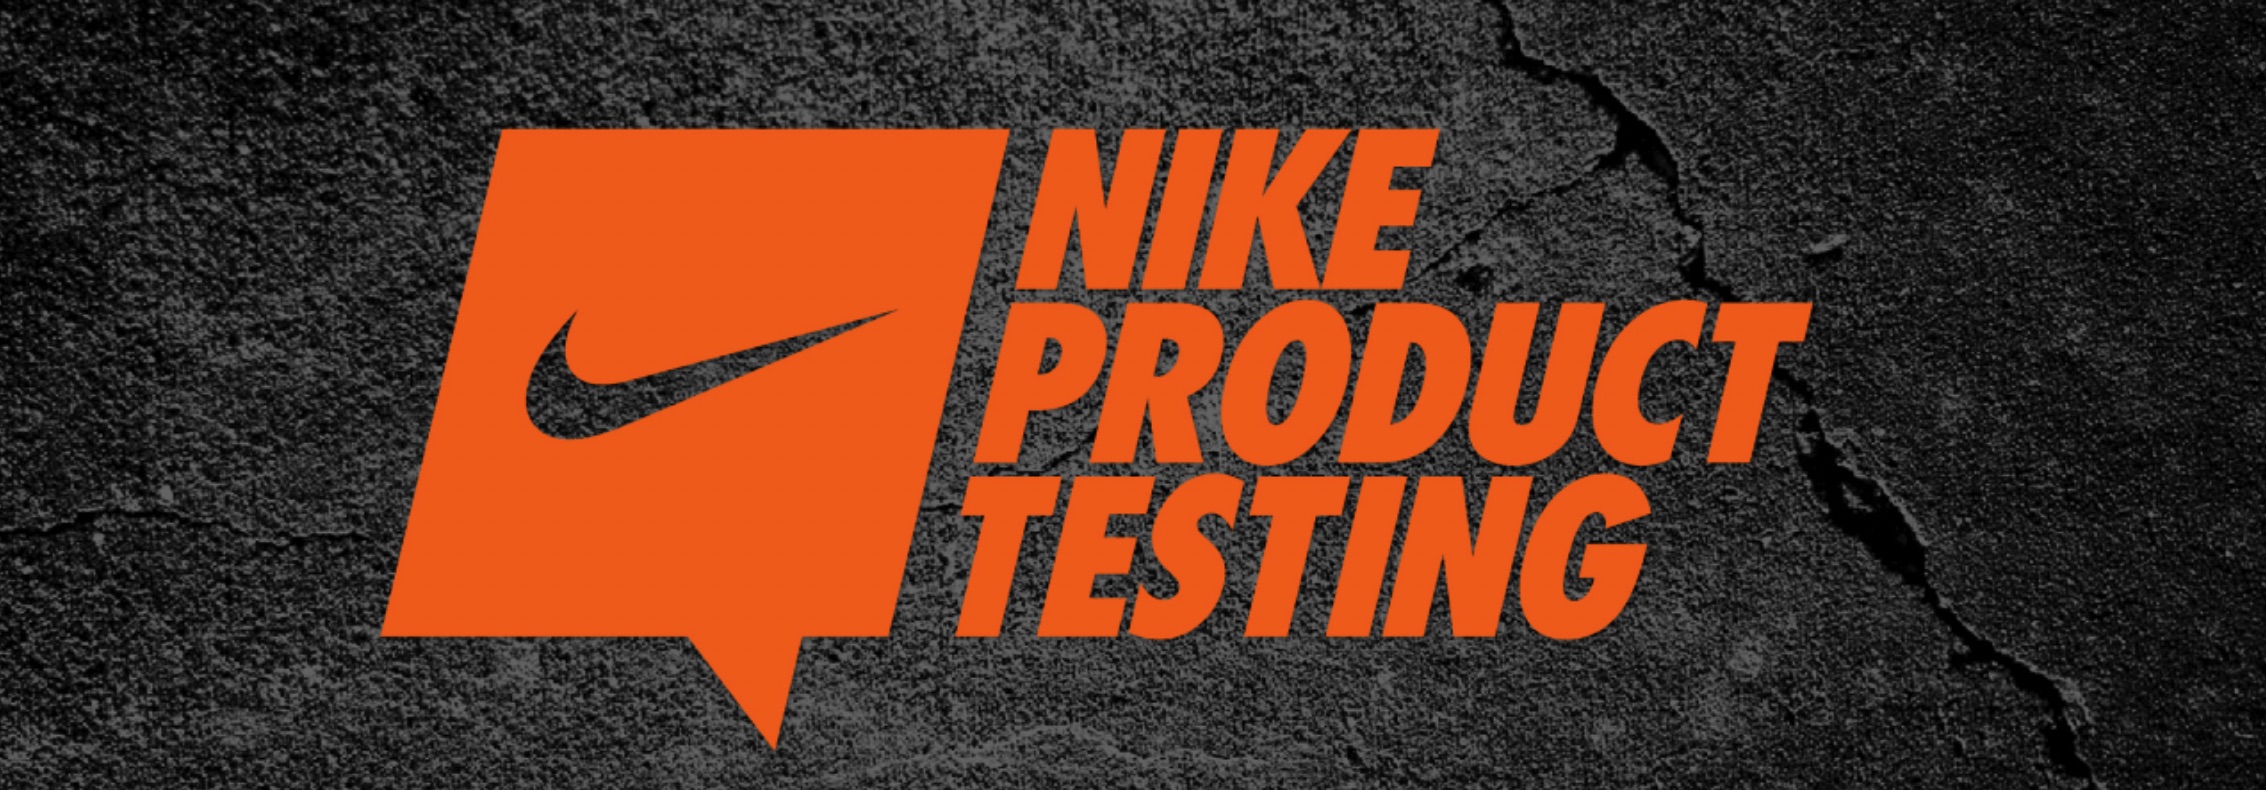 nike product testing